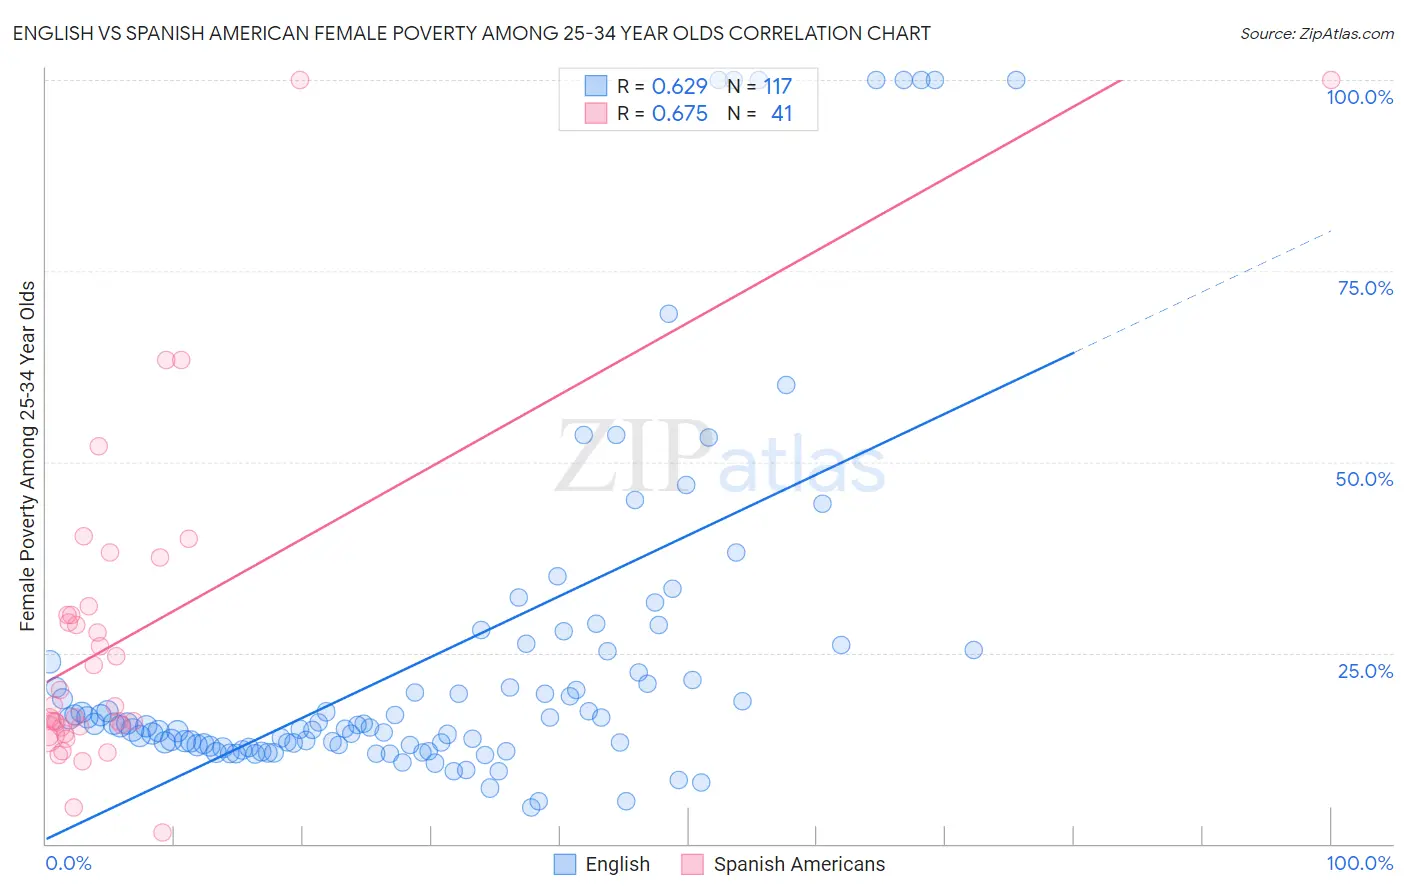 English vs Spanish American Female Poverty Among 25-34 Year Olds